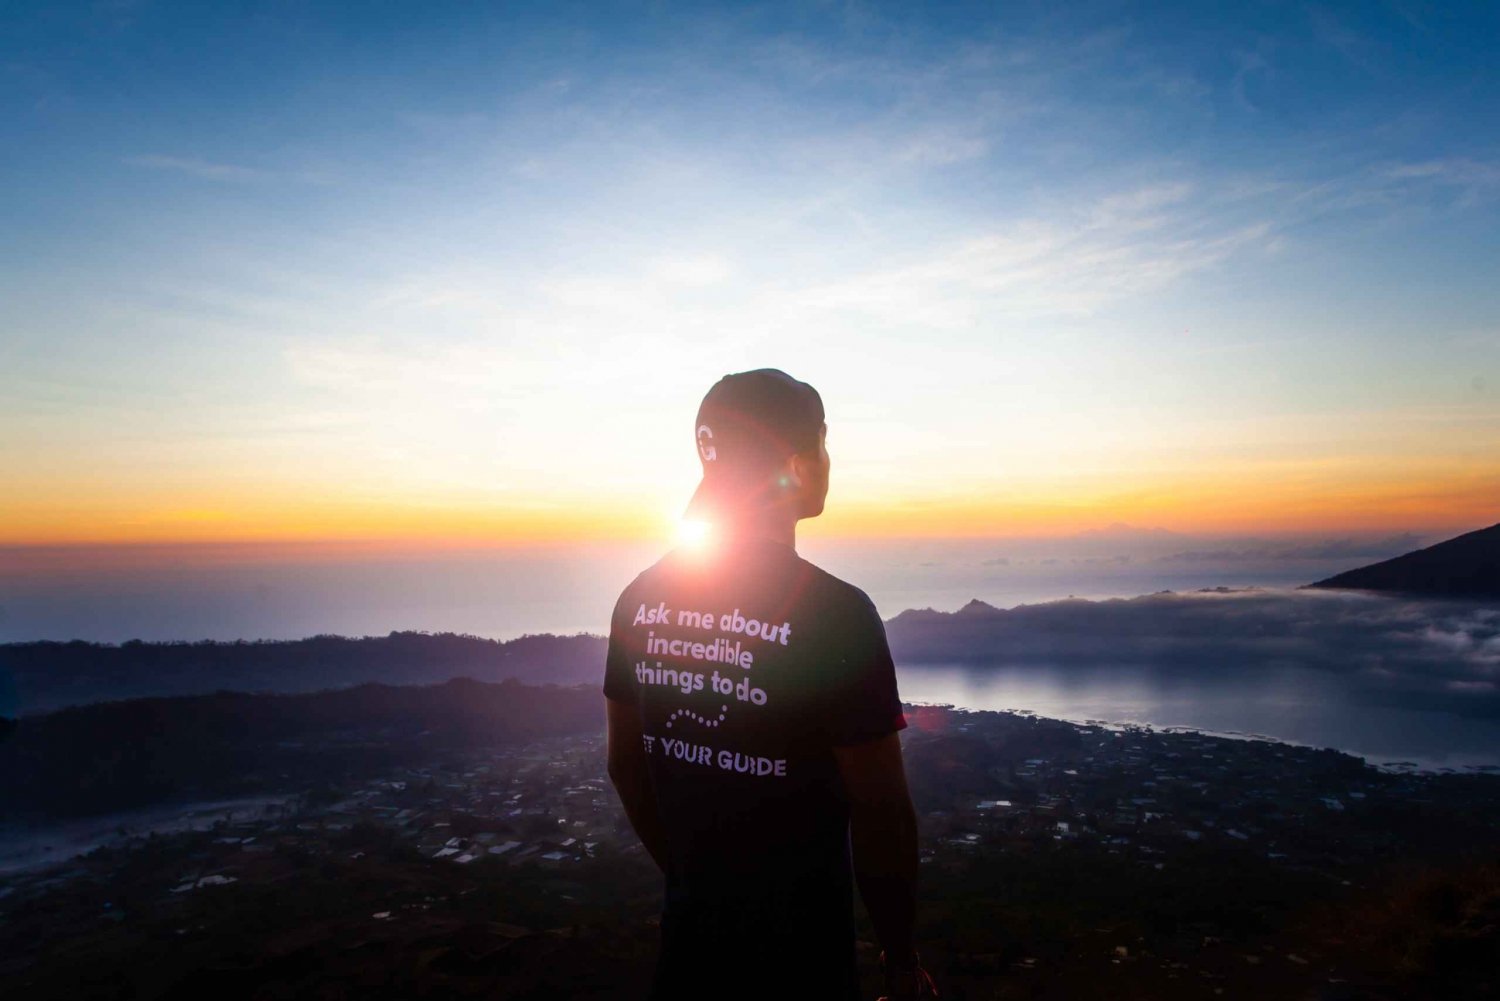 Bali: Sunrise Mount Batur Hike with Breakfast